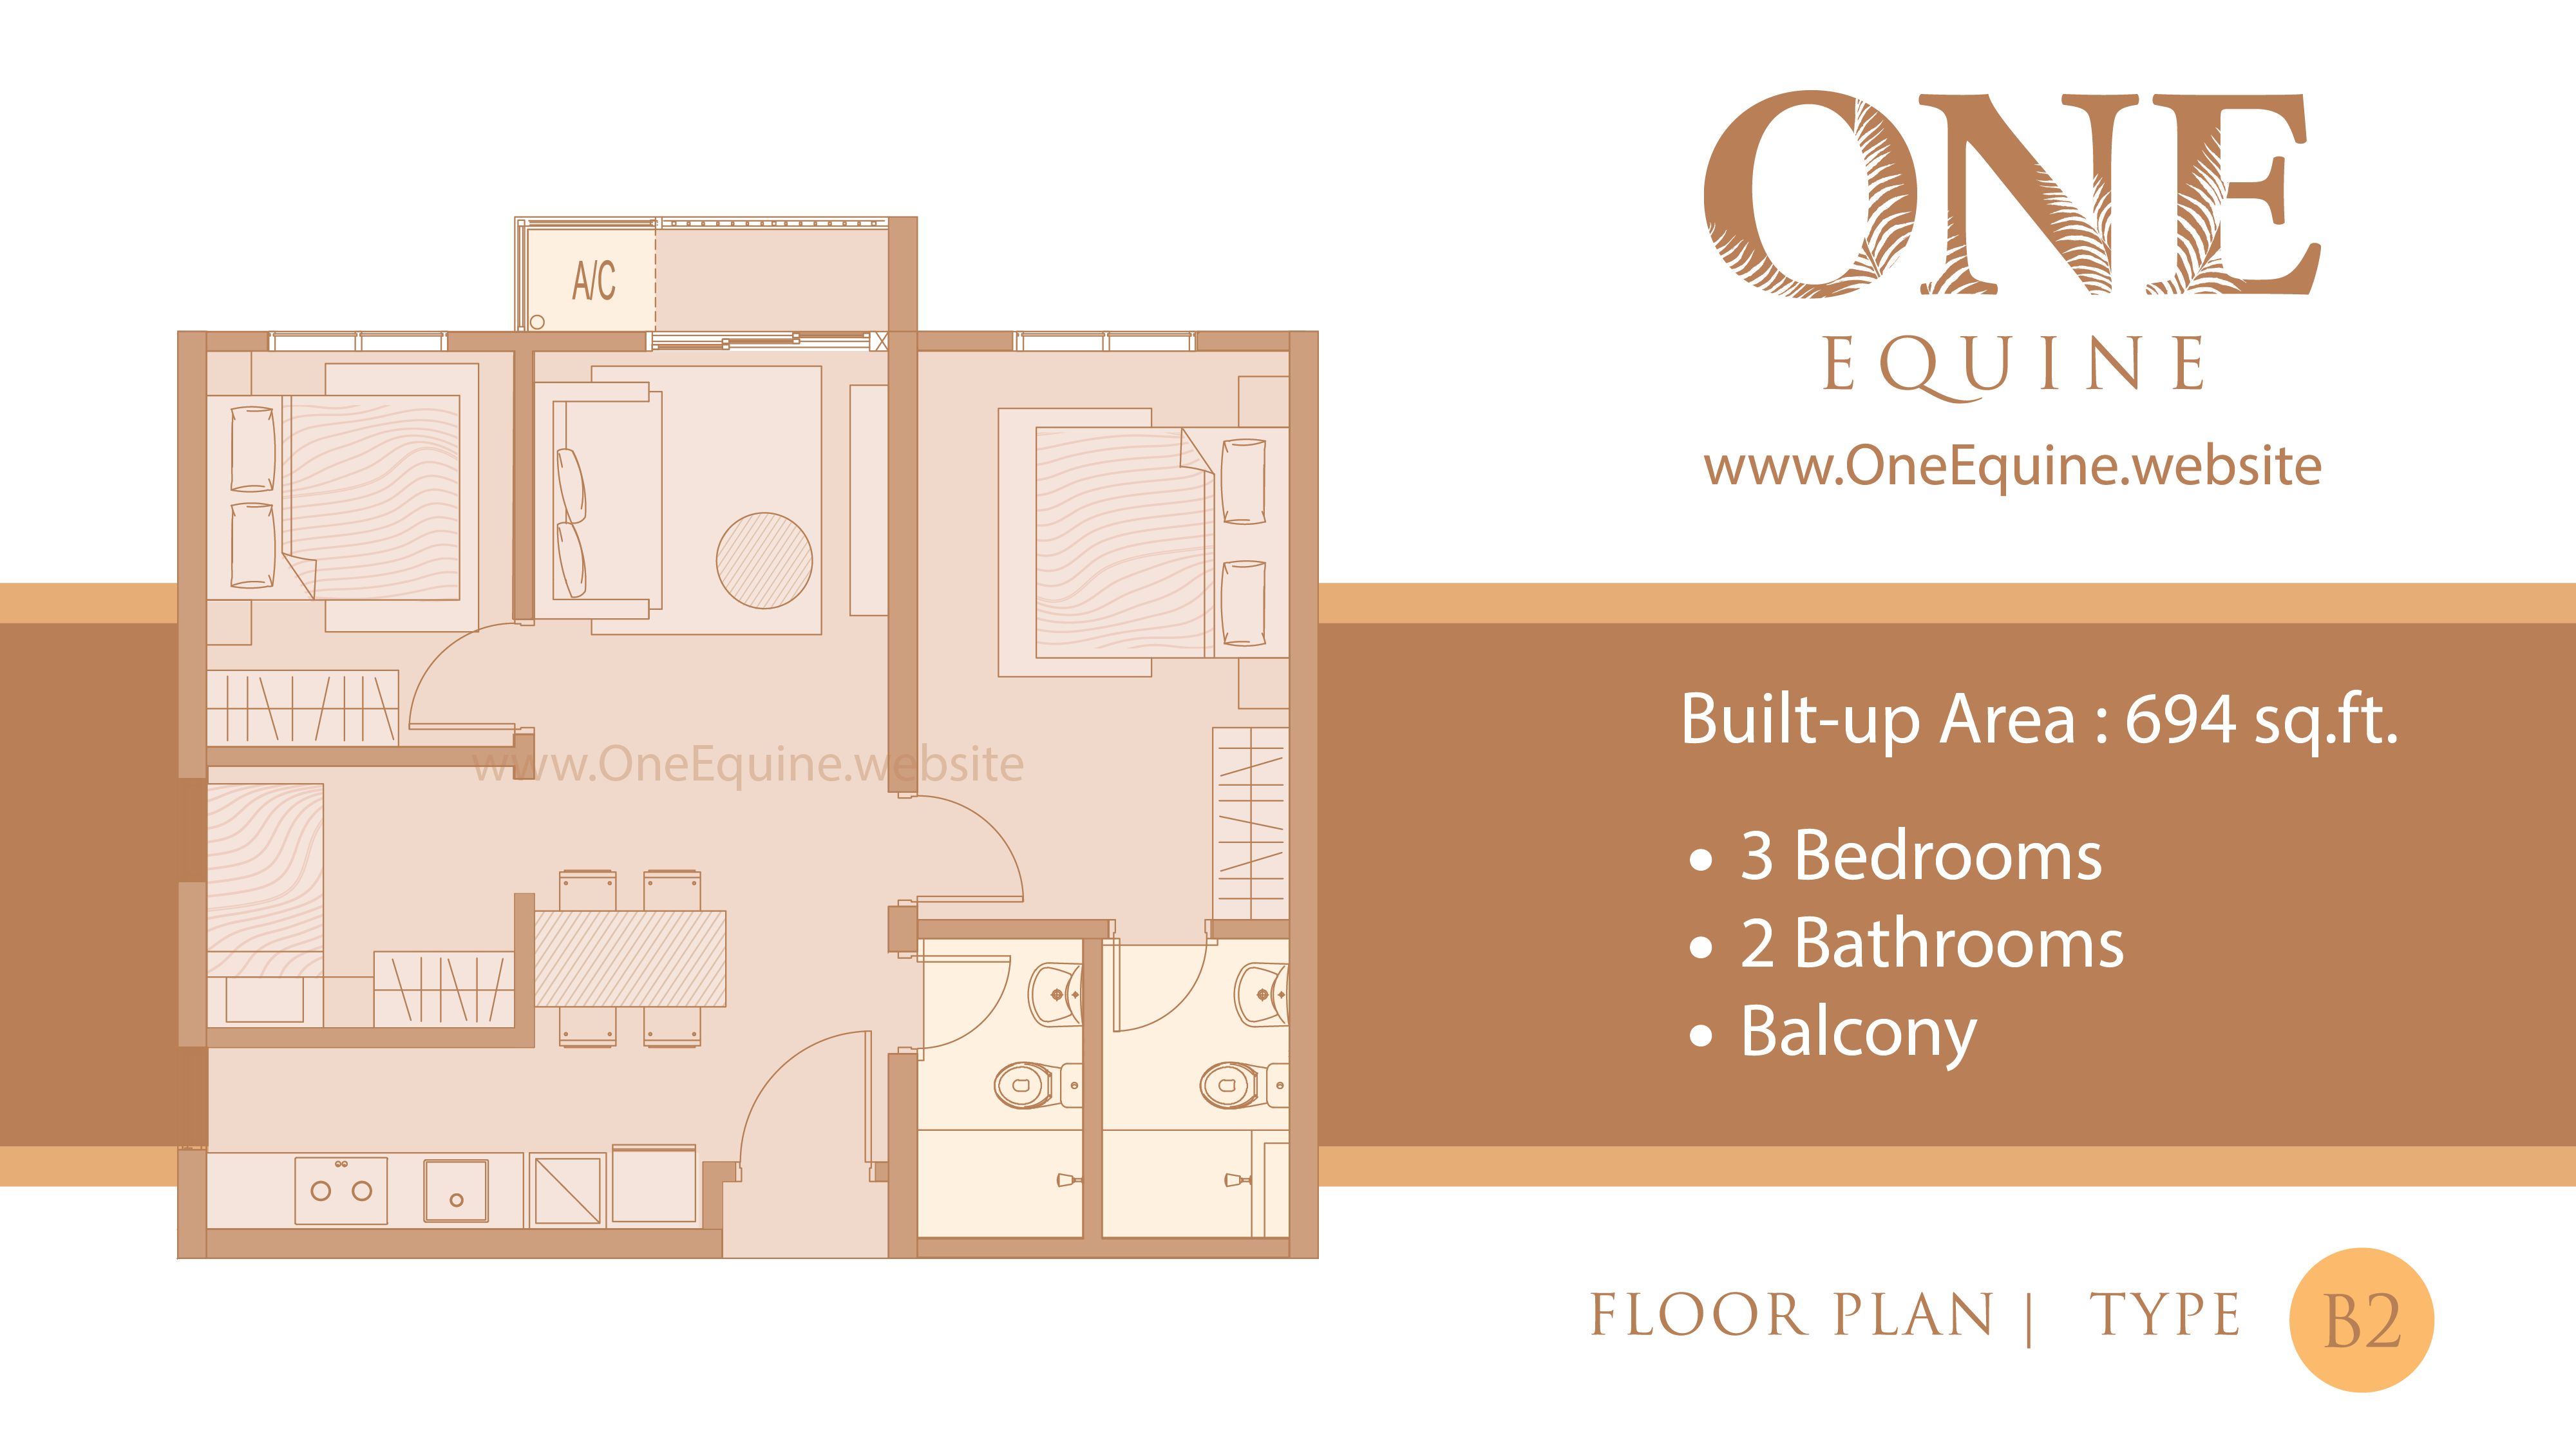 One Equine Park Seri Kembangan - Serviced Apartment 3 Bedrooms 2 Bathrooms Balcony - Floor Plan Type B2 - 694 sqft